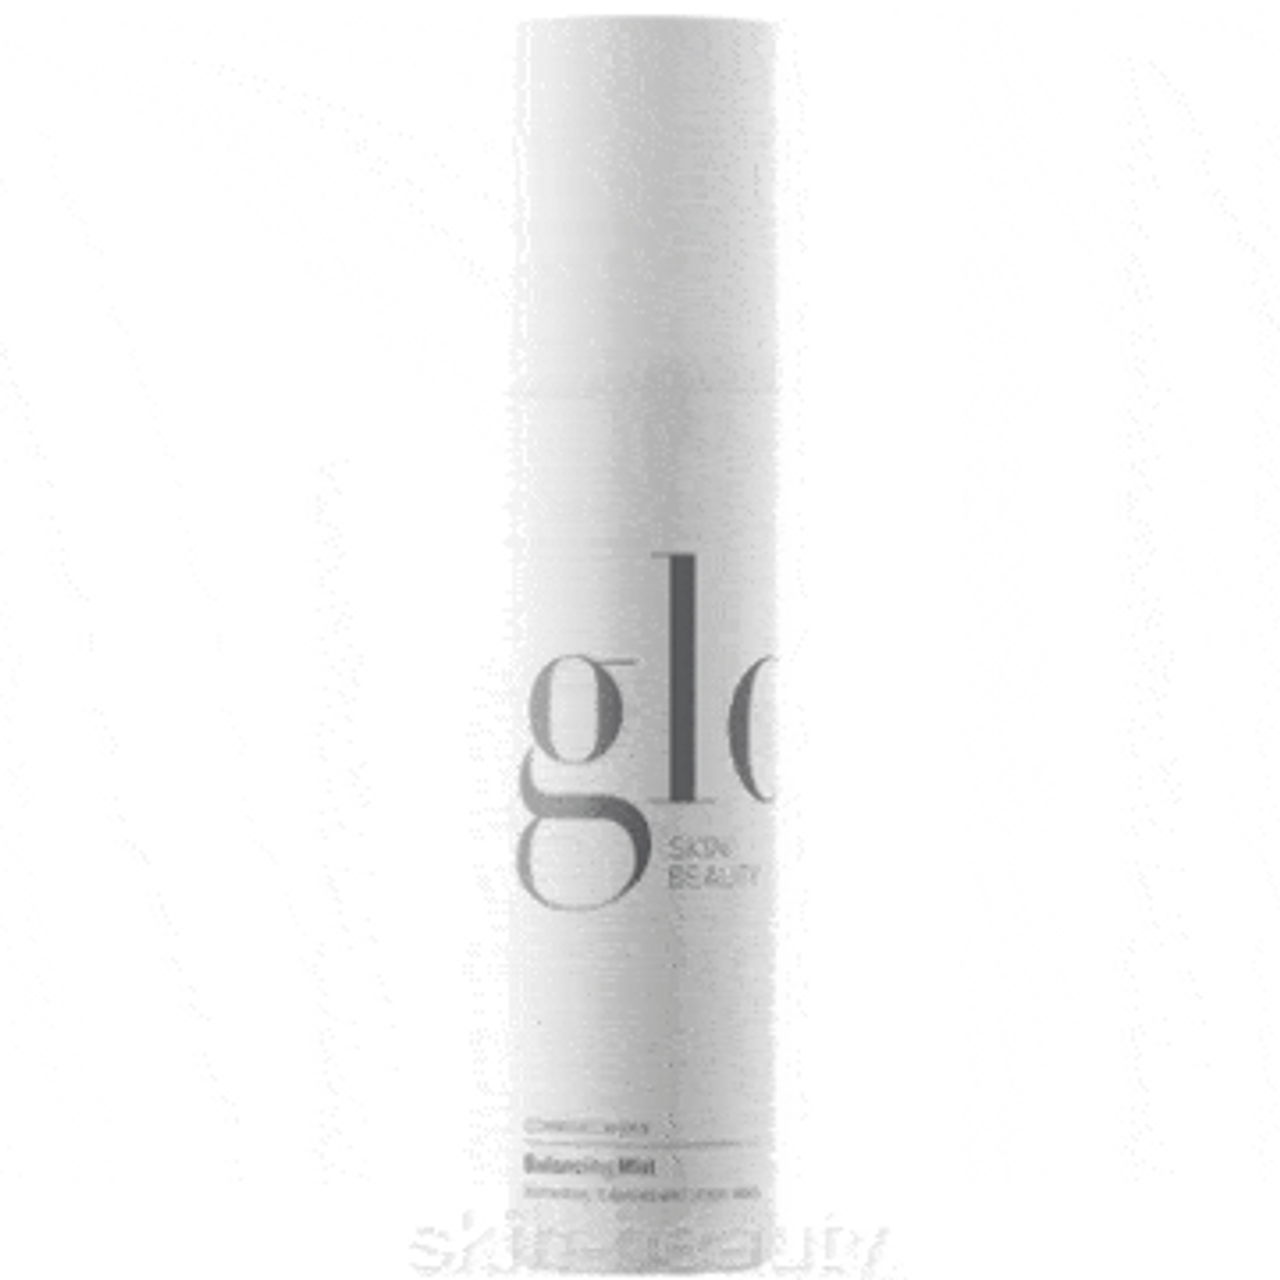 Glo Skin Beauty Balancing Mist - 4 oz (606)